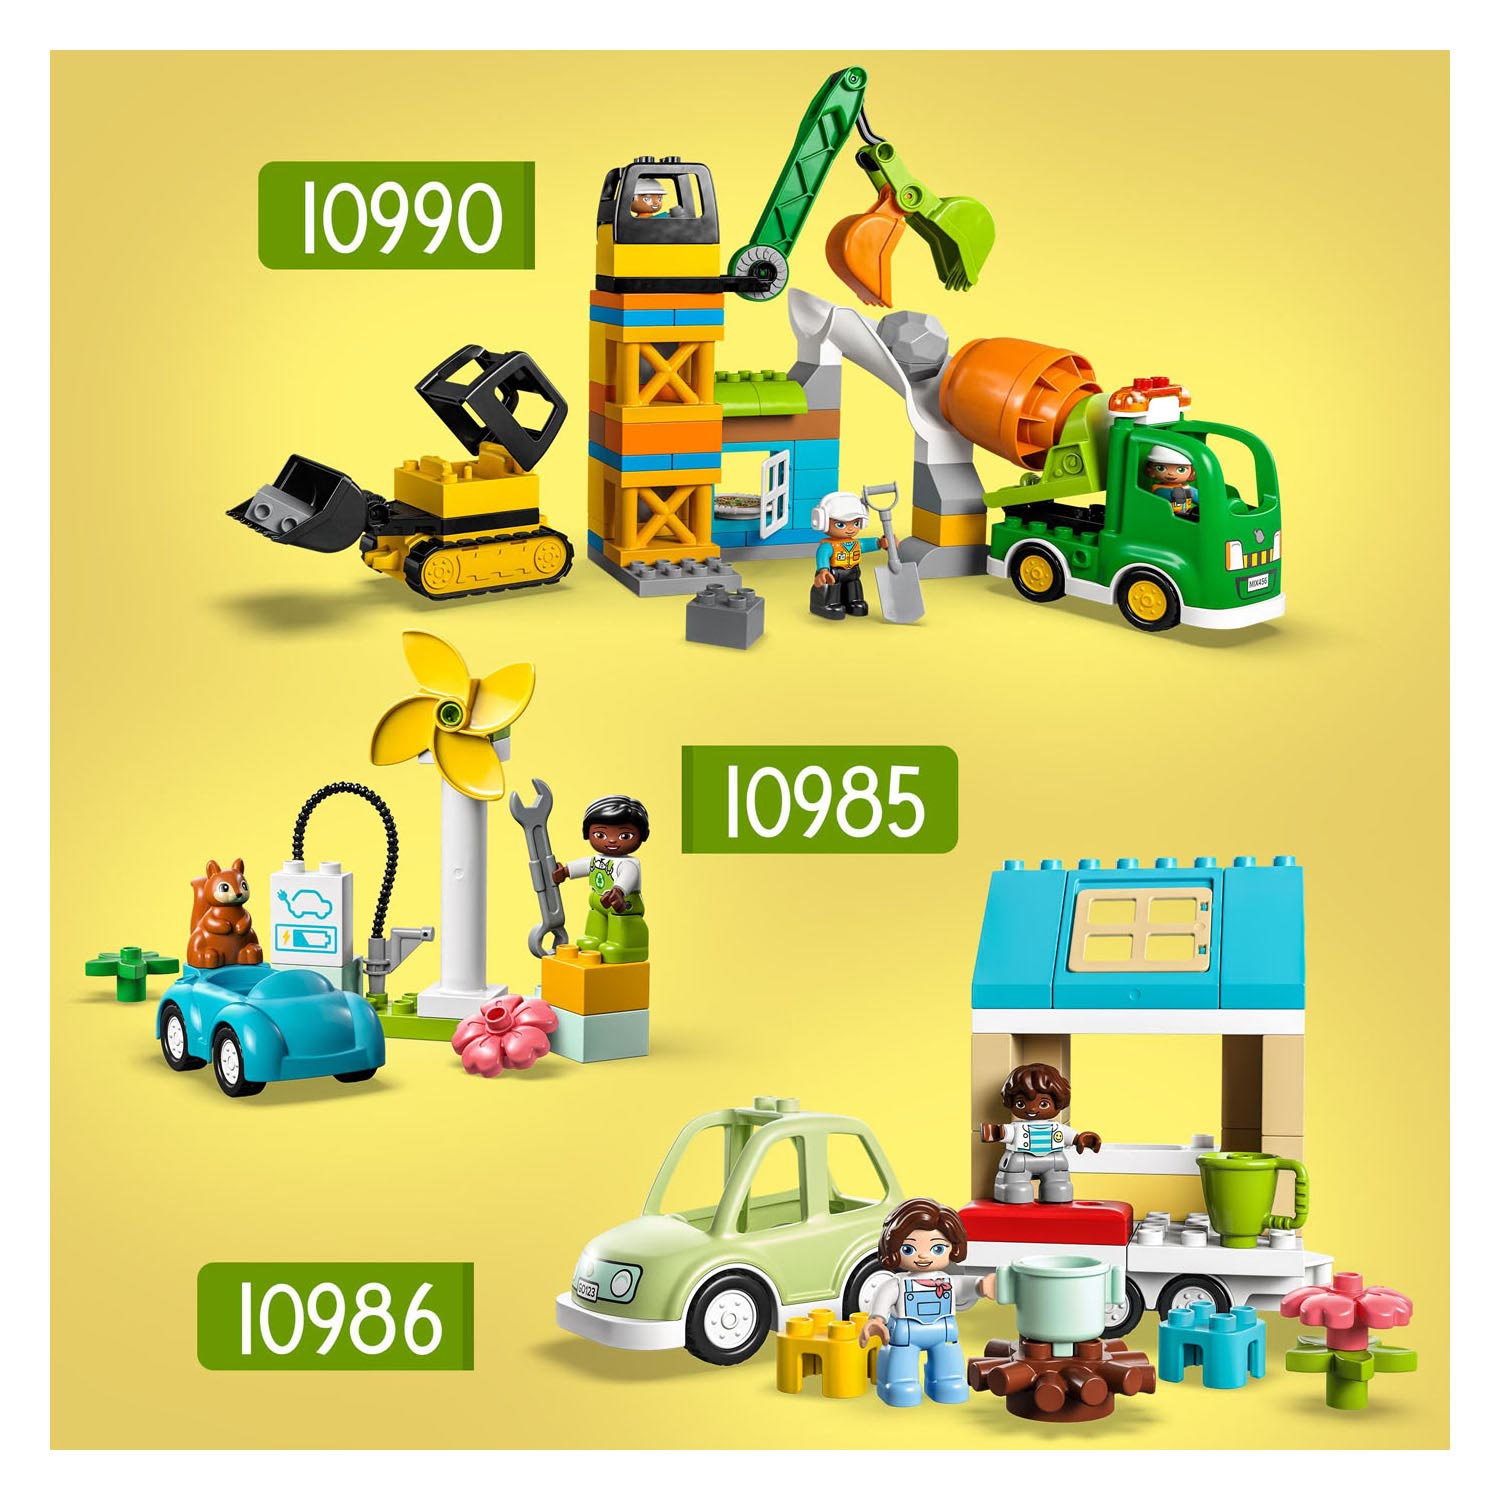 LEGO DUPLO 10985 Windmolen en Elektrische Auto